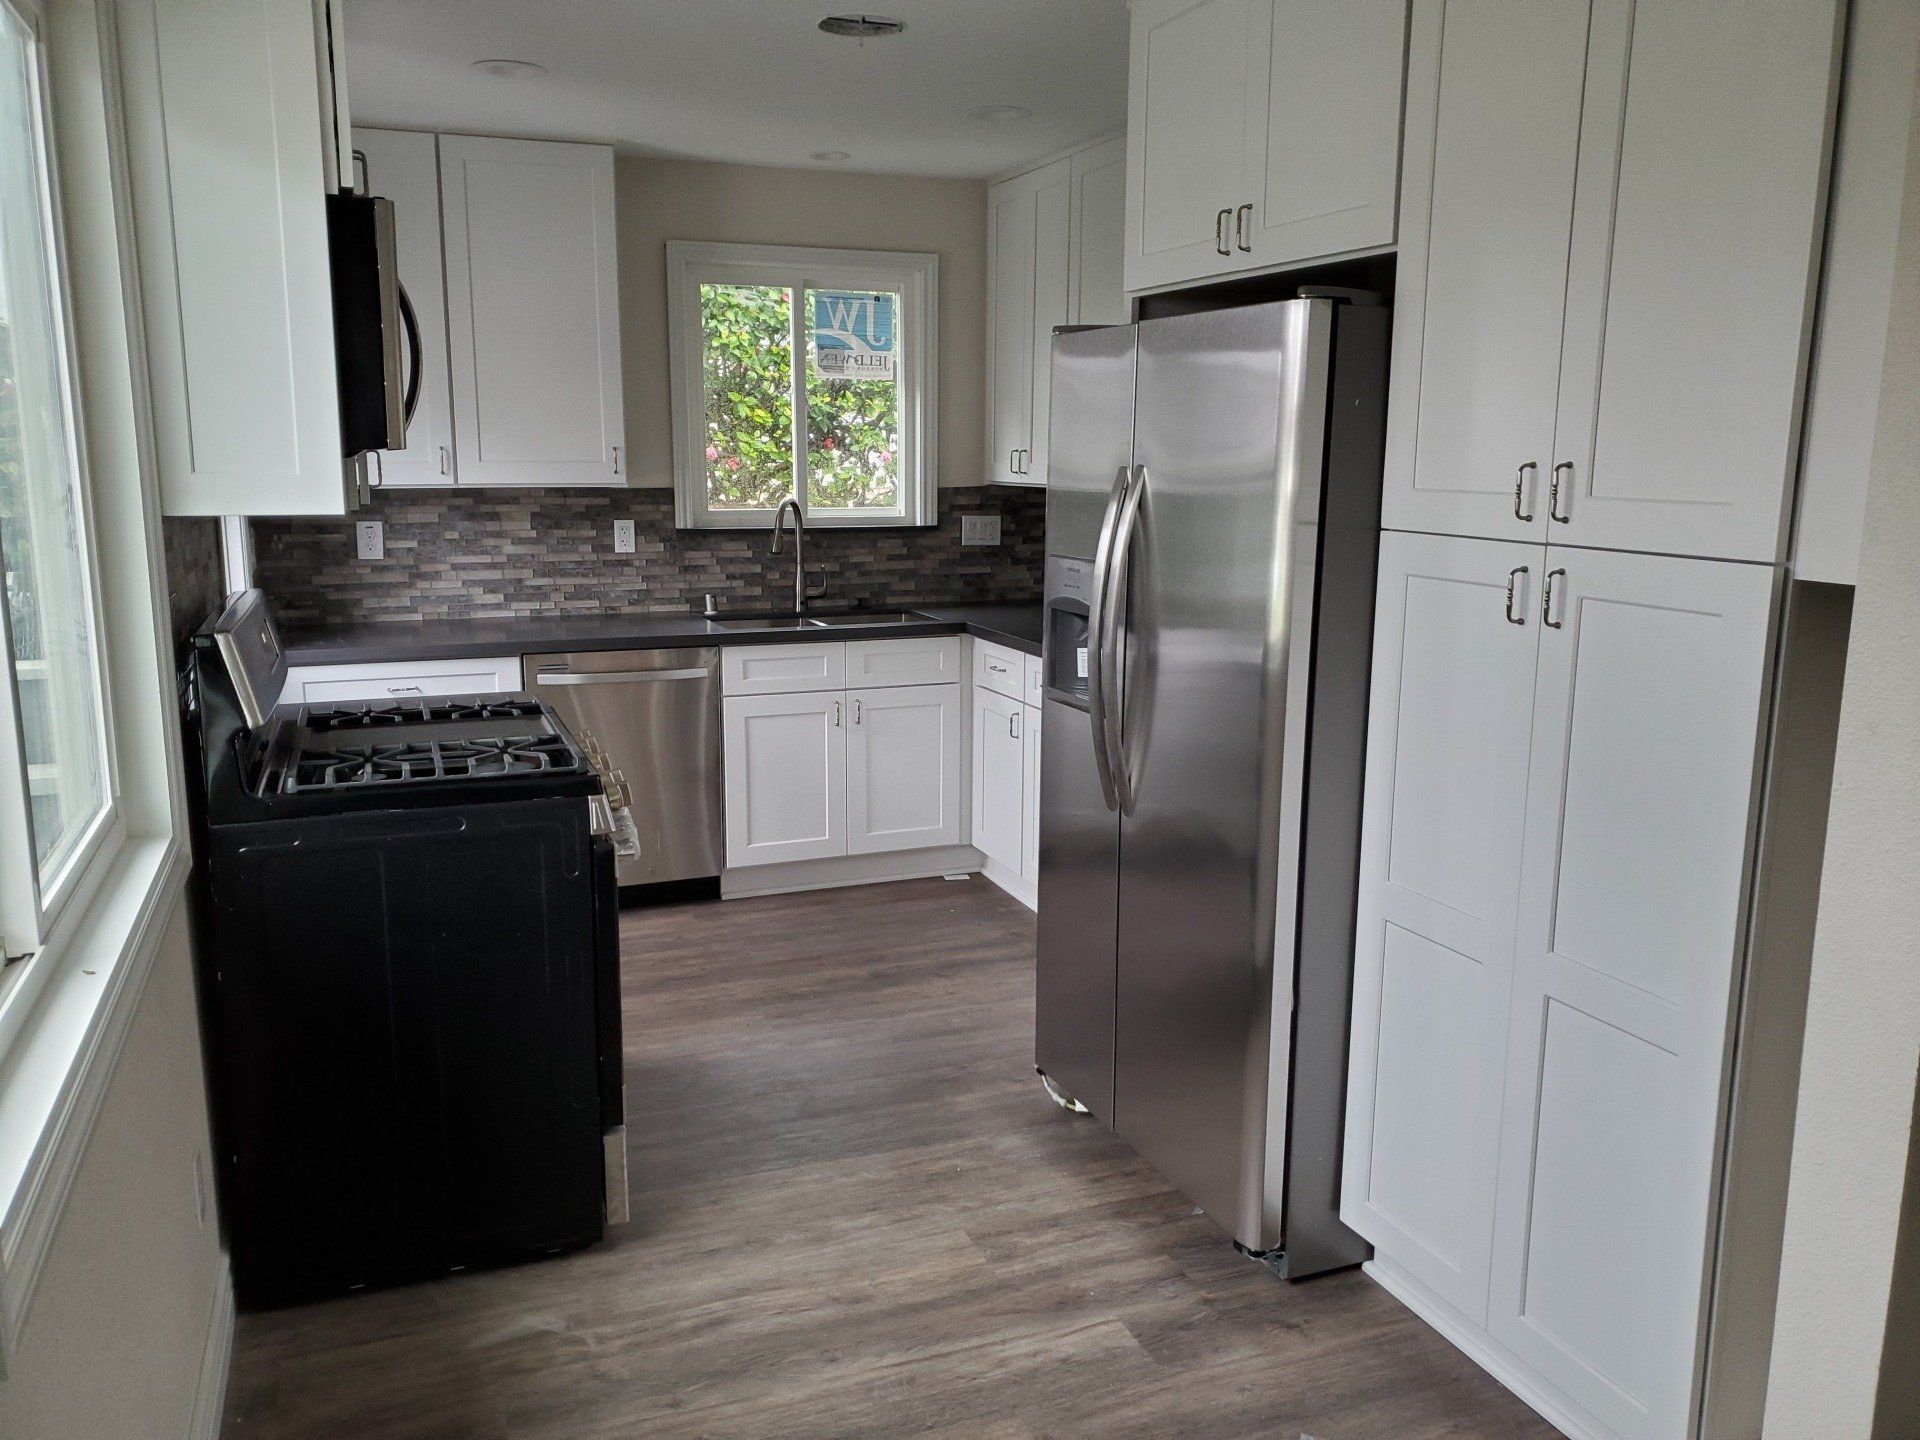 Kitchen & Bath Cabinetry — Classy Kitchen Design in San Marcos, CA